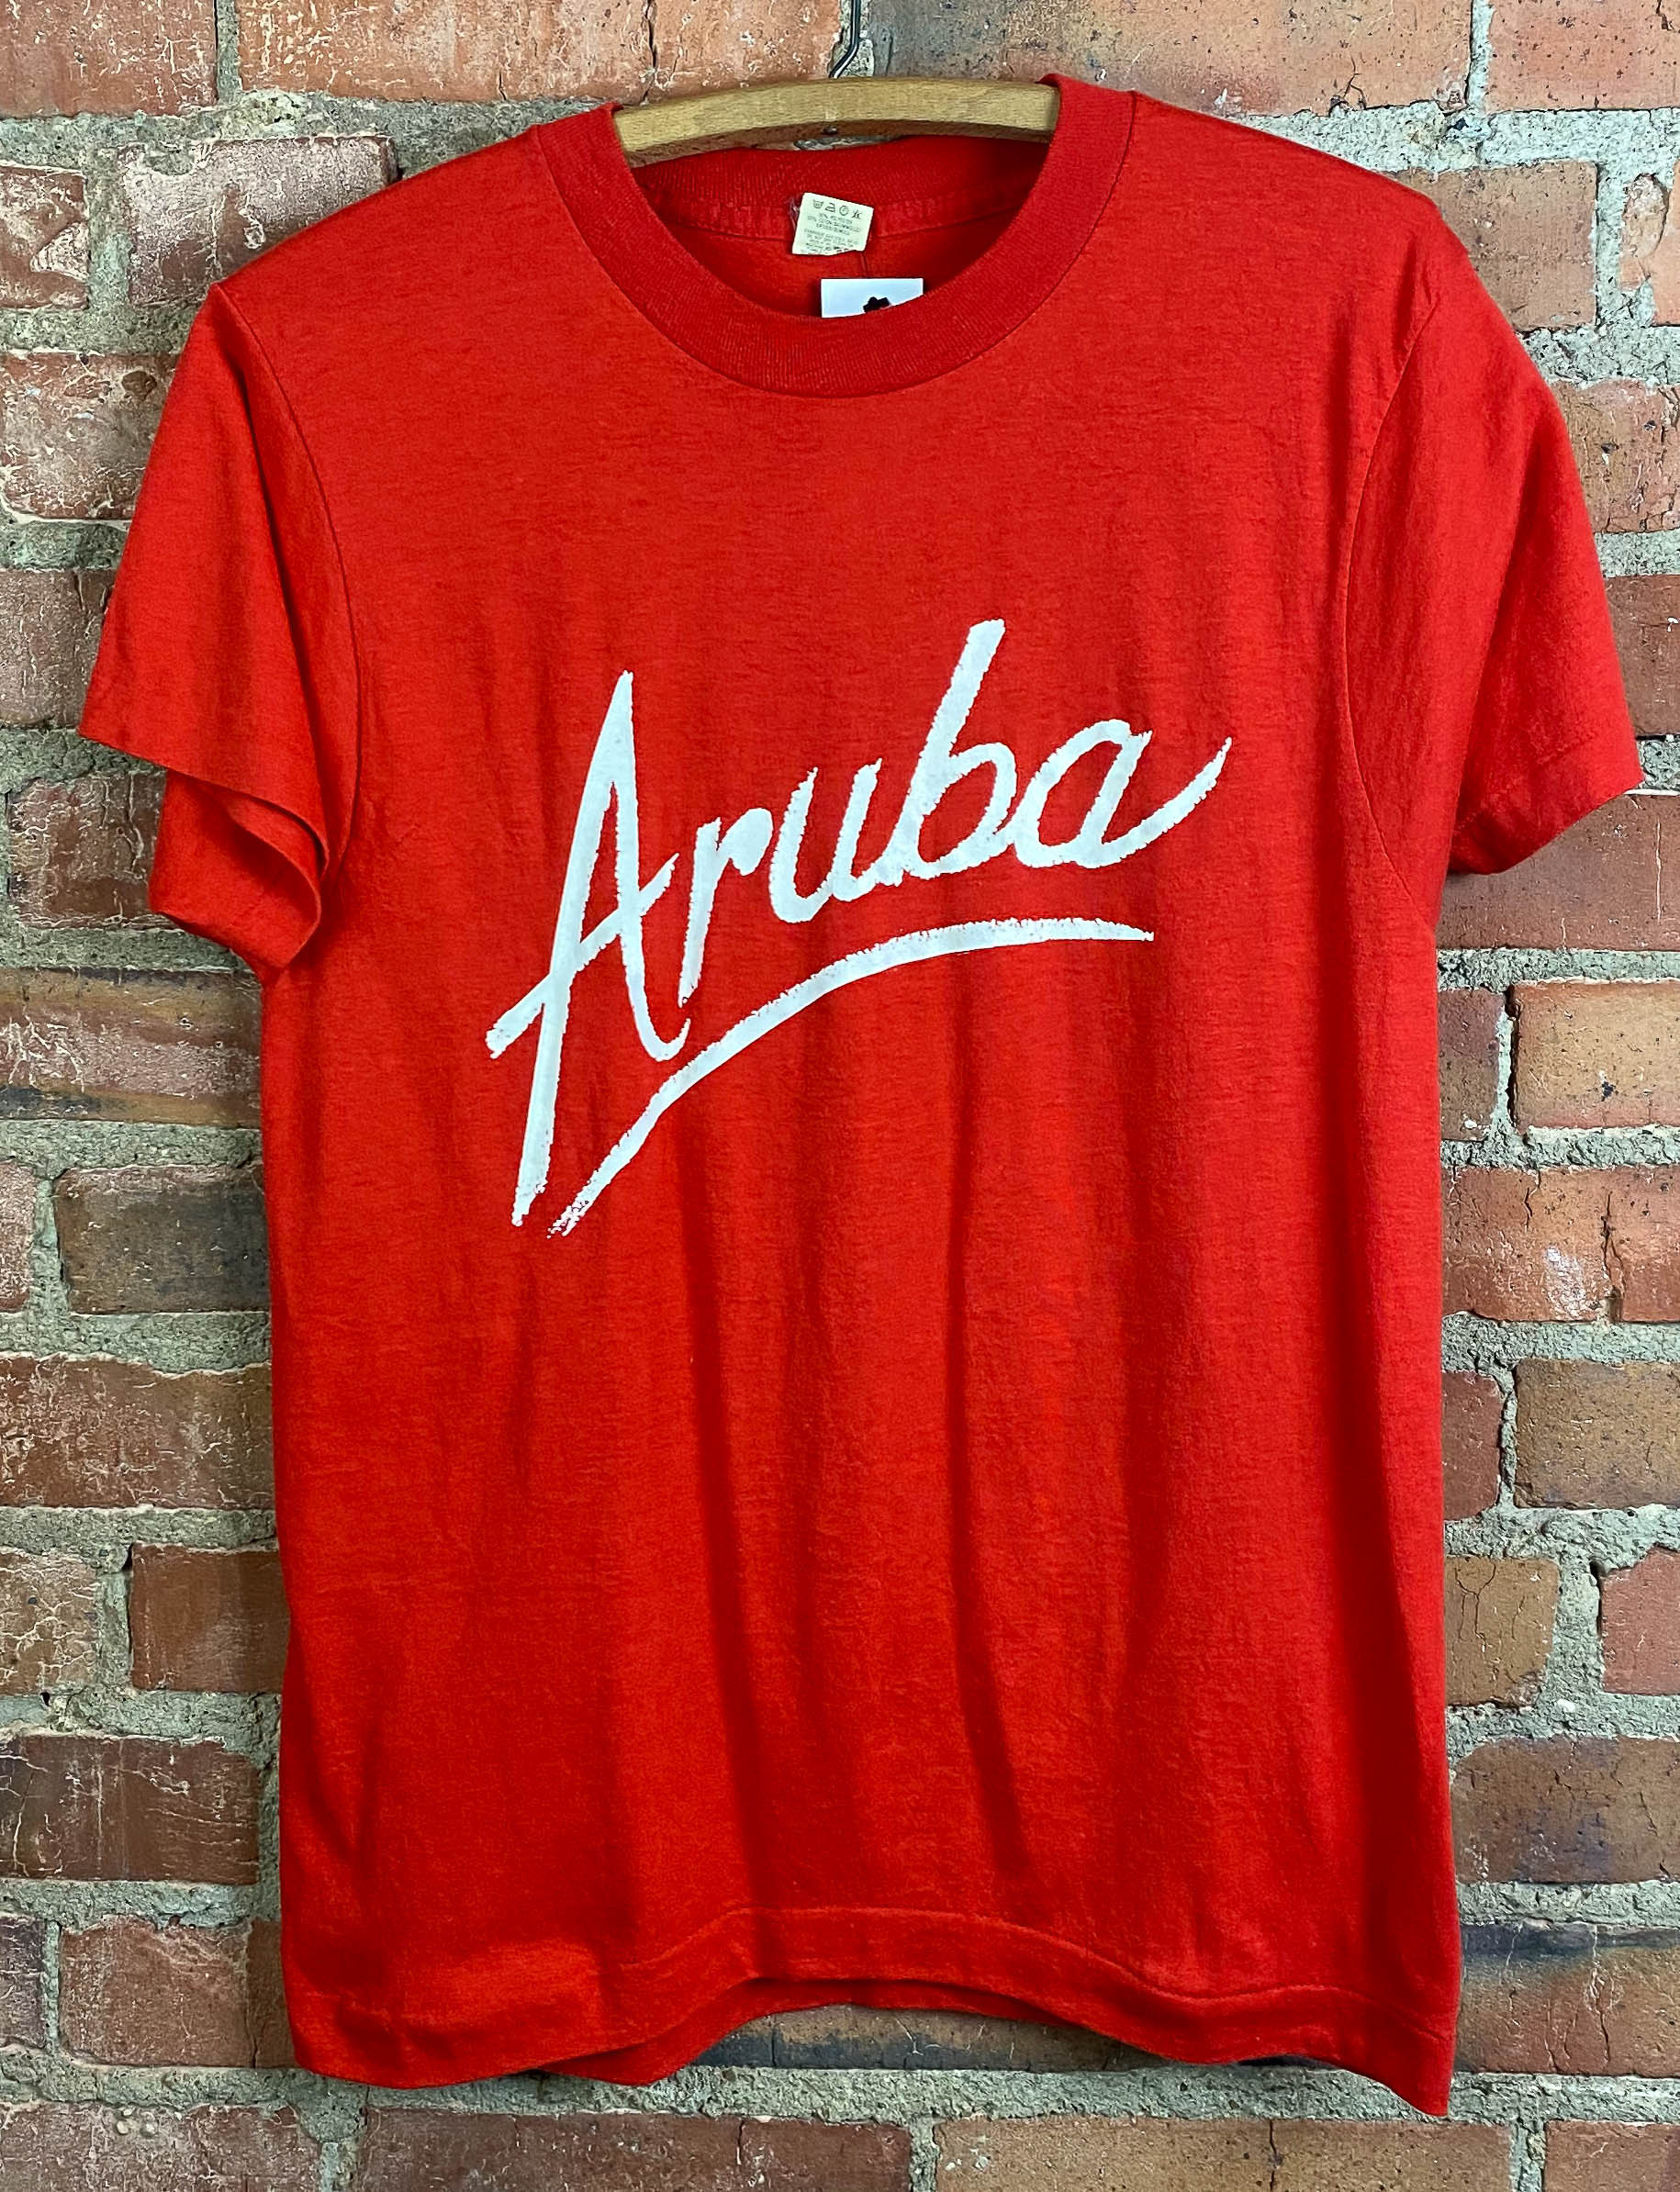 Vintage 80's Aruba Graphic T Shirt Souvenir Vacation Red Unisex Medium